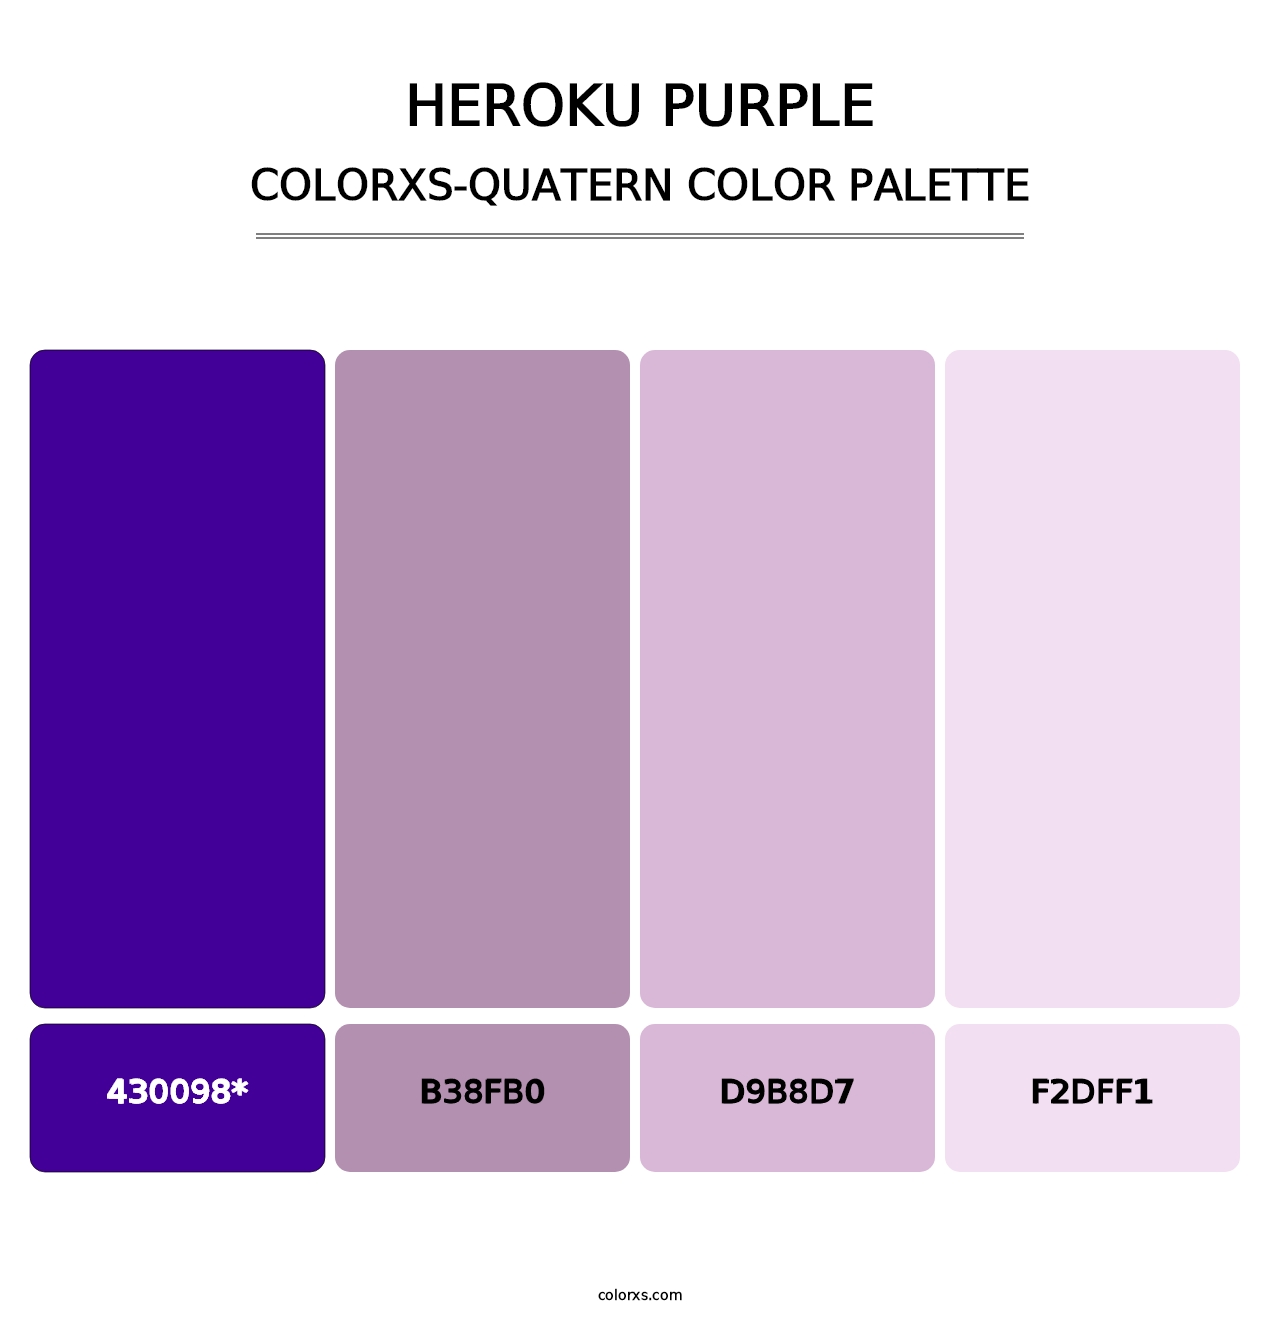 Heroku Purple - Colorxs Quatern Palette